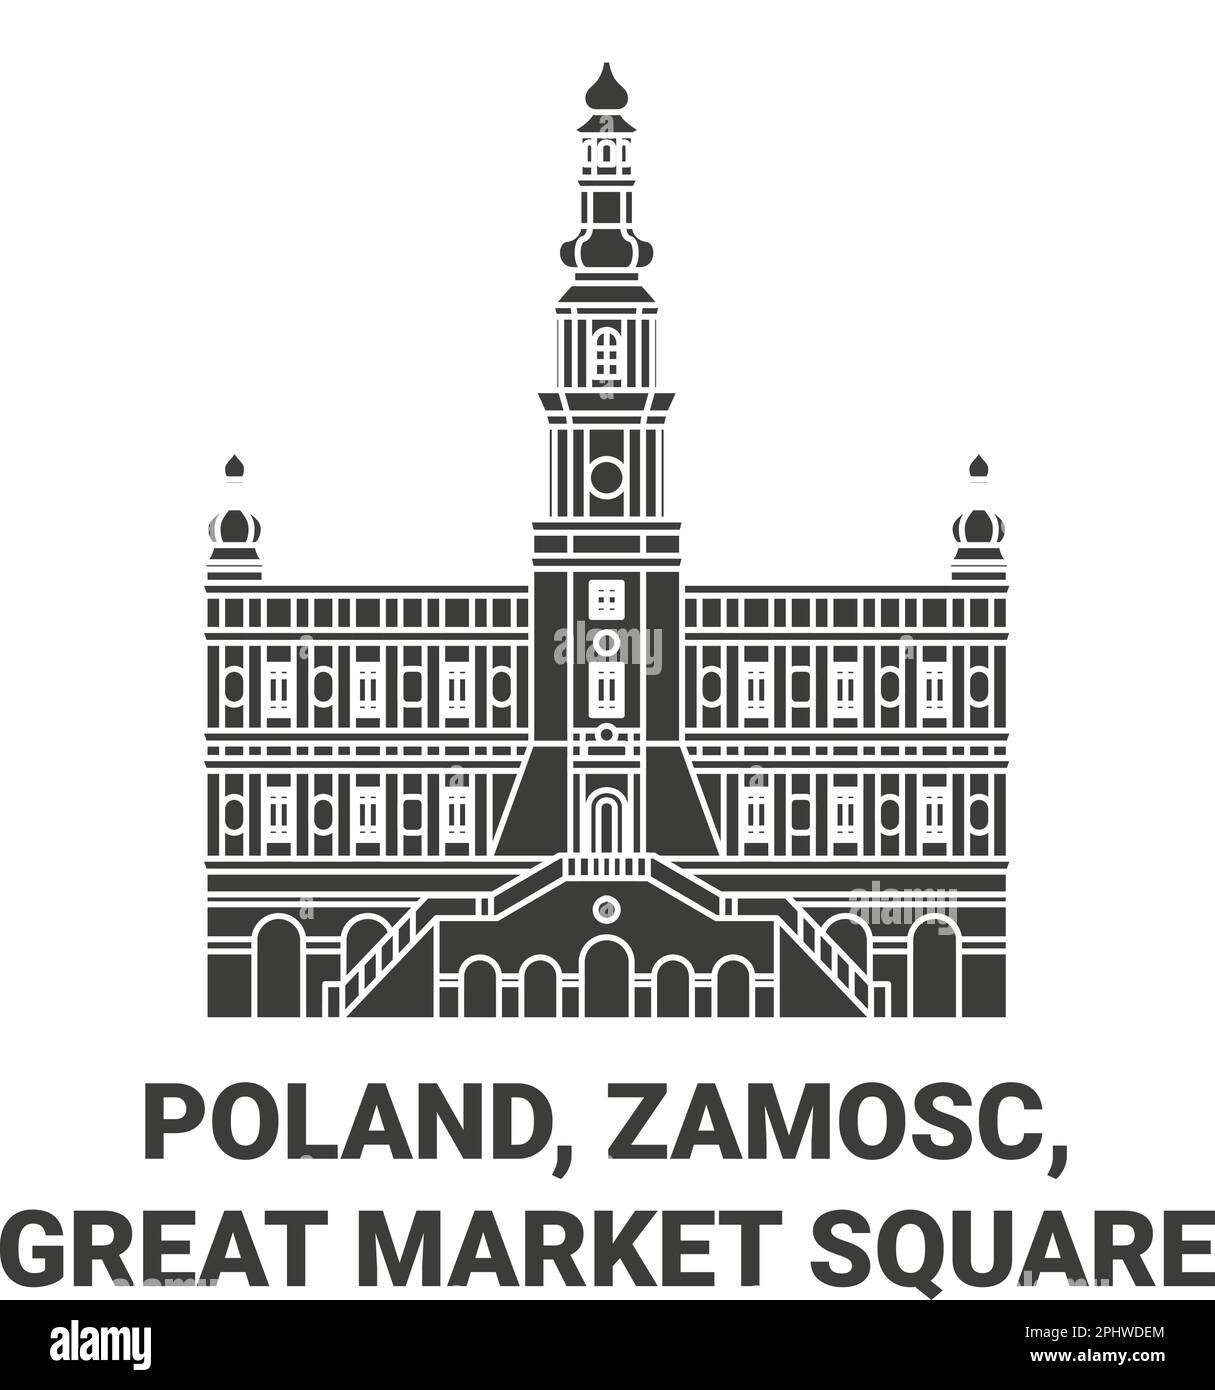 Polen, Zamosc, Great Market Square, Wegweiser-Vektorgrafik Stock Vektor